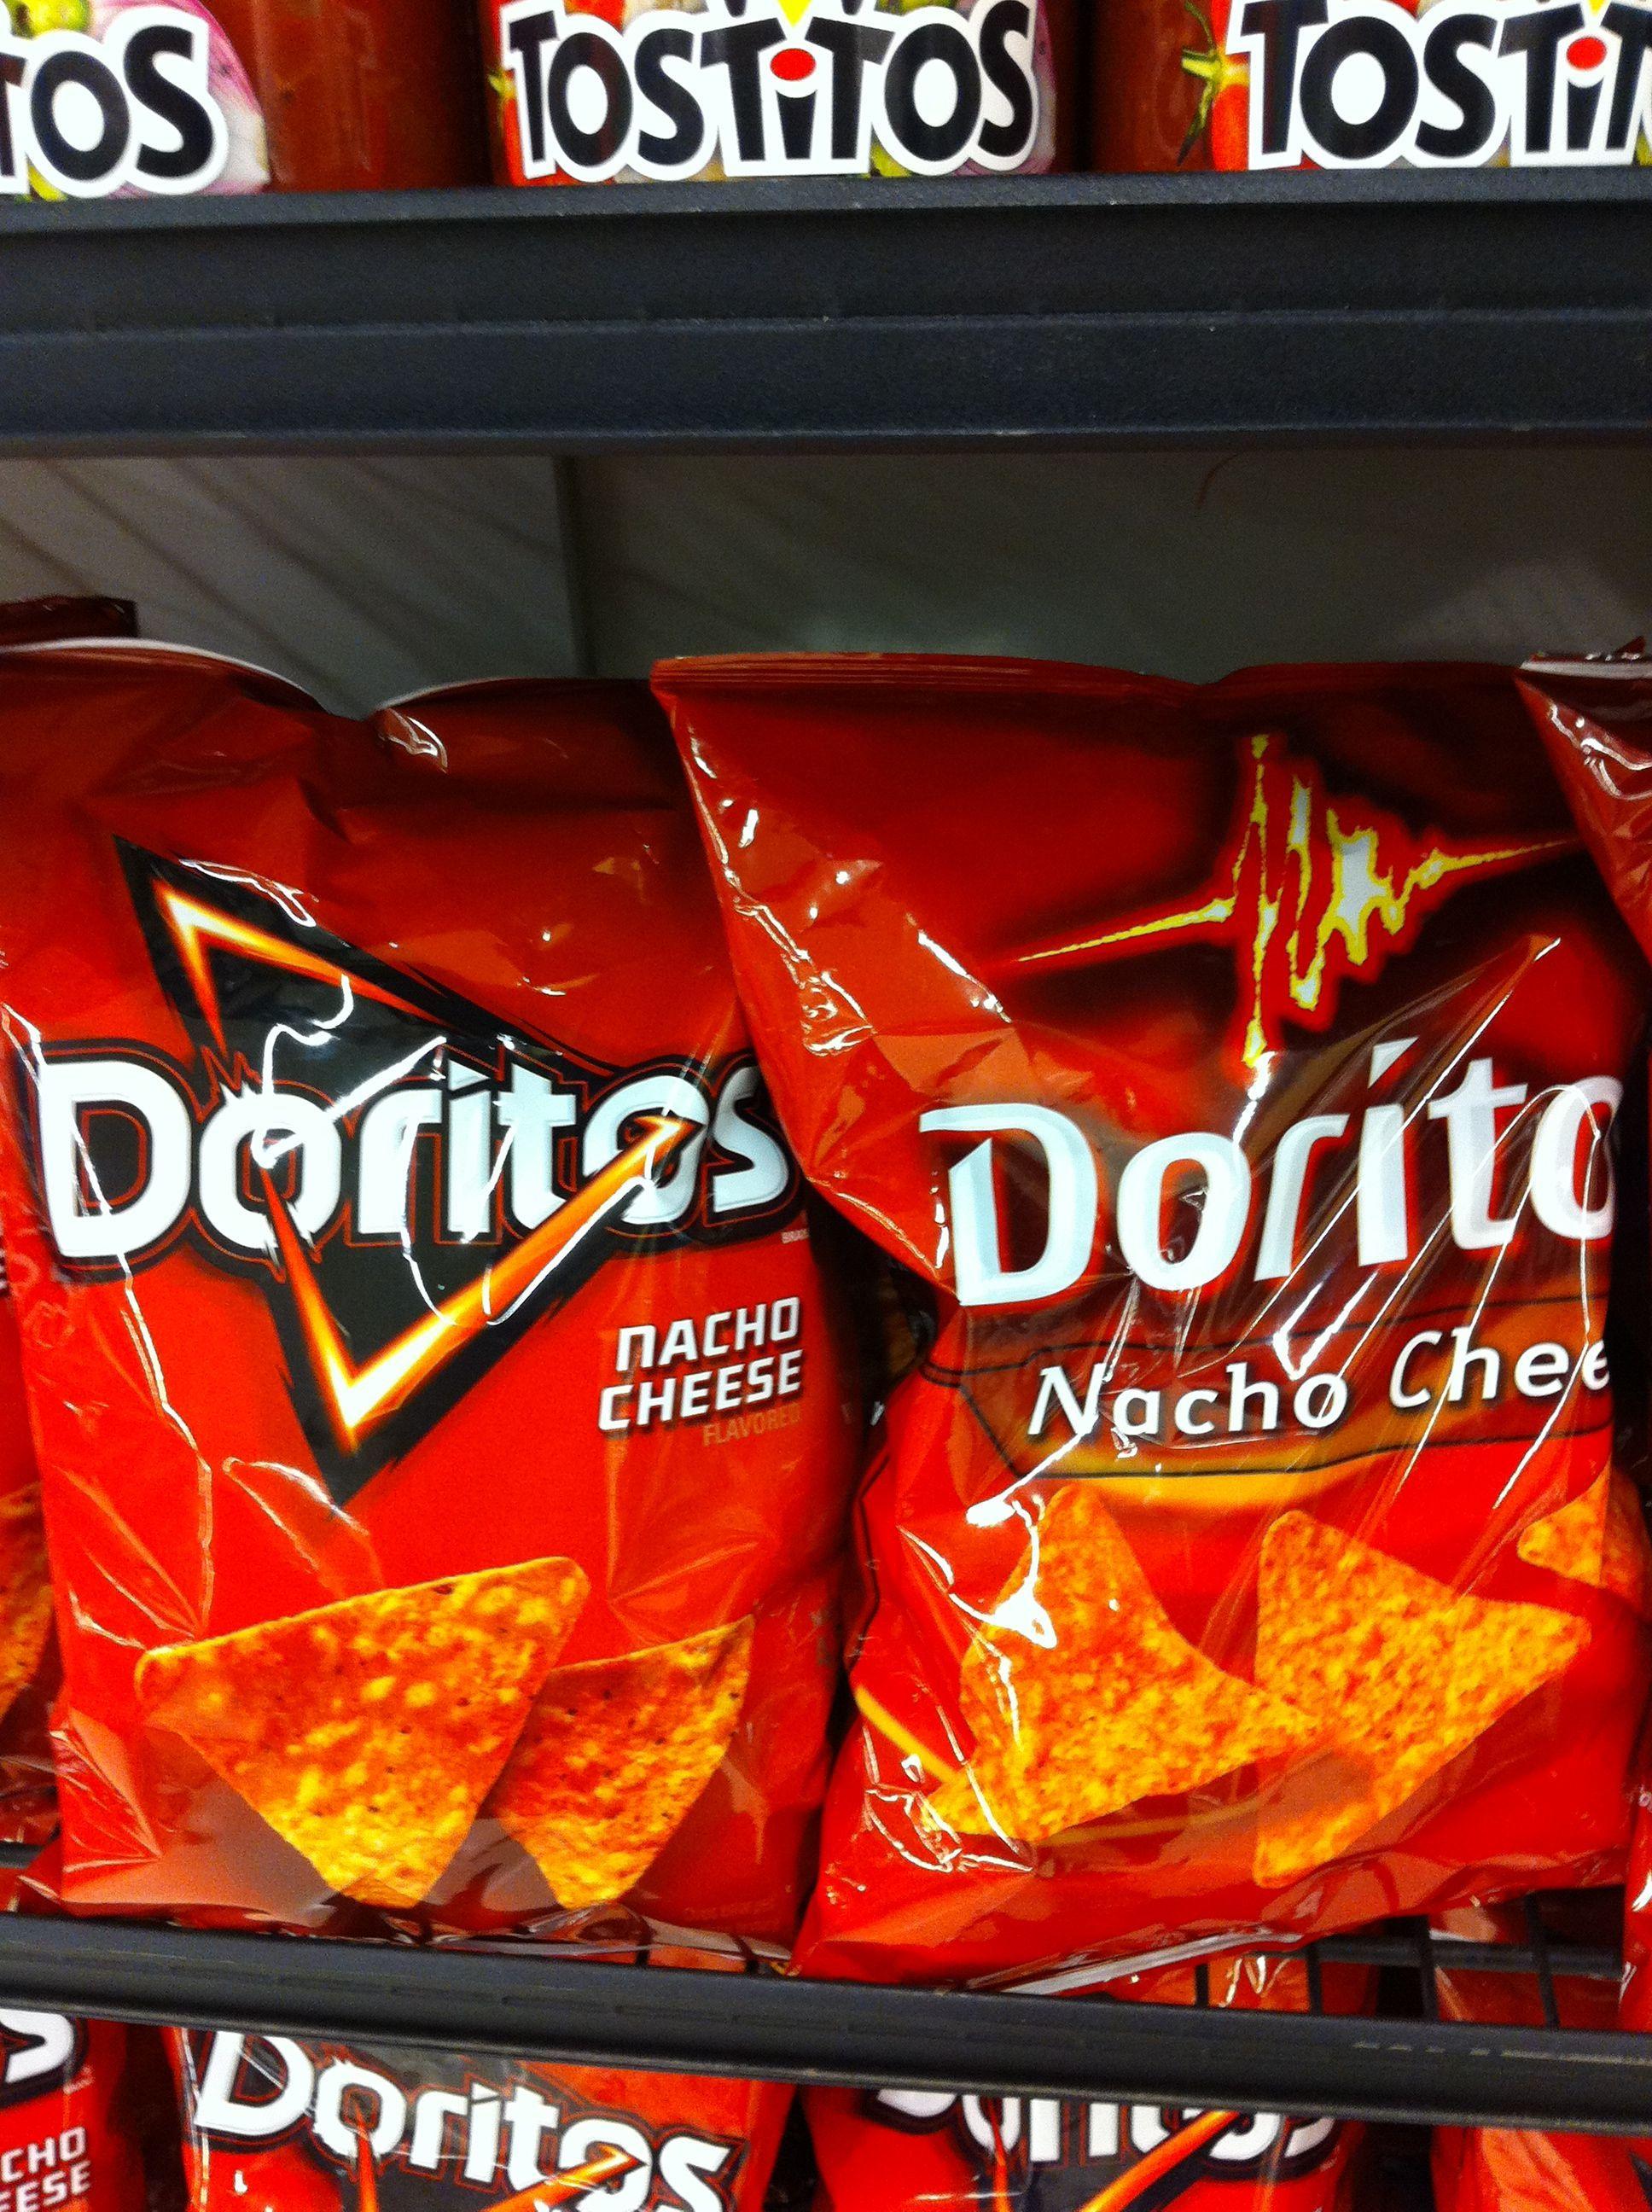 New Doritos Logo - I'm kinda diggin' the new Doritos logo! | Typography | Pinterest ...